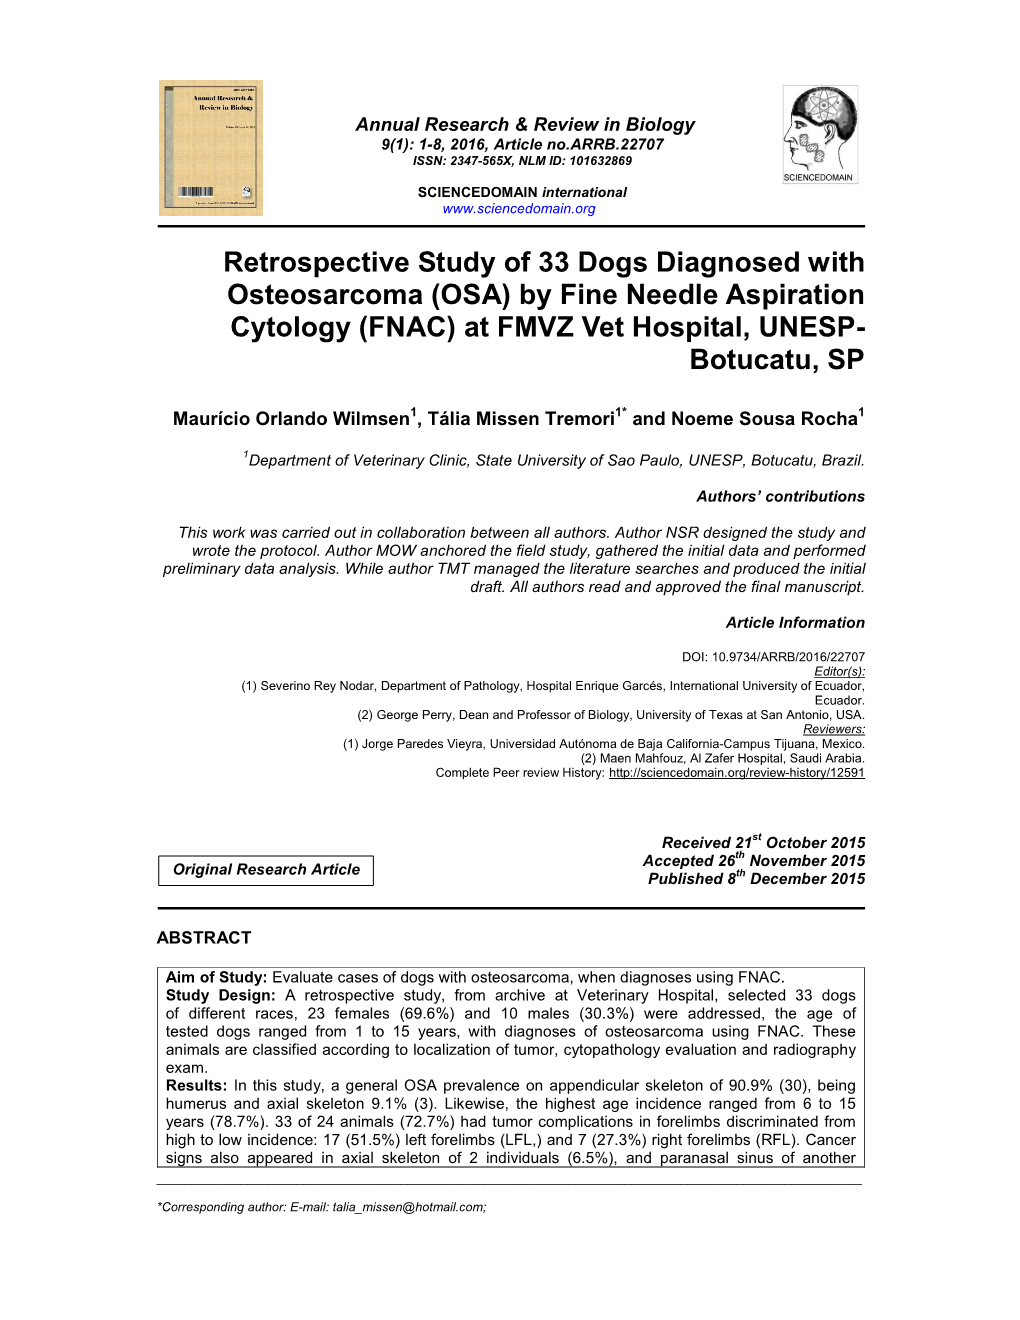 (OSA) by Fine Needle Aspiration Cytology (FNAC) at FMVZ Vet Hospital, UNESP- Botucatu, SP